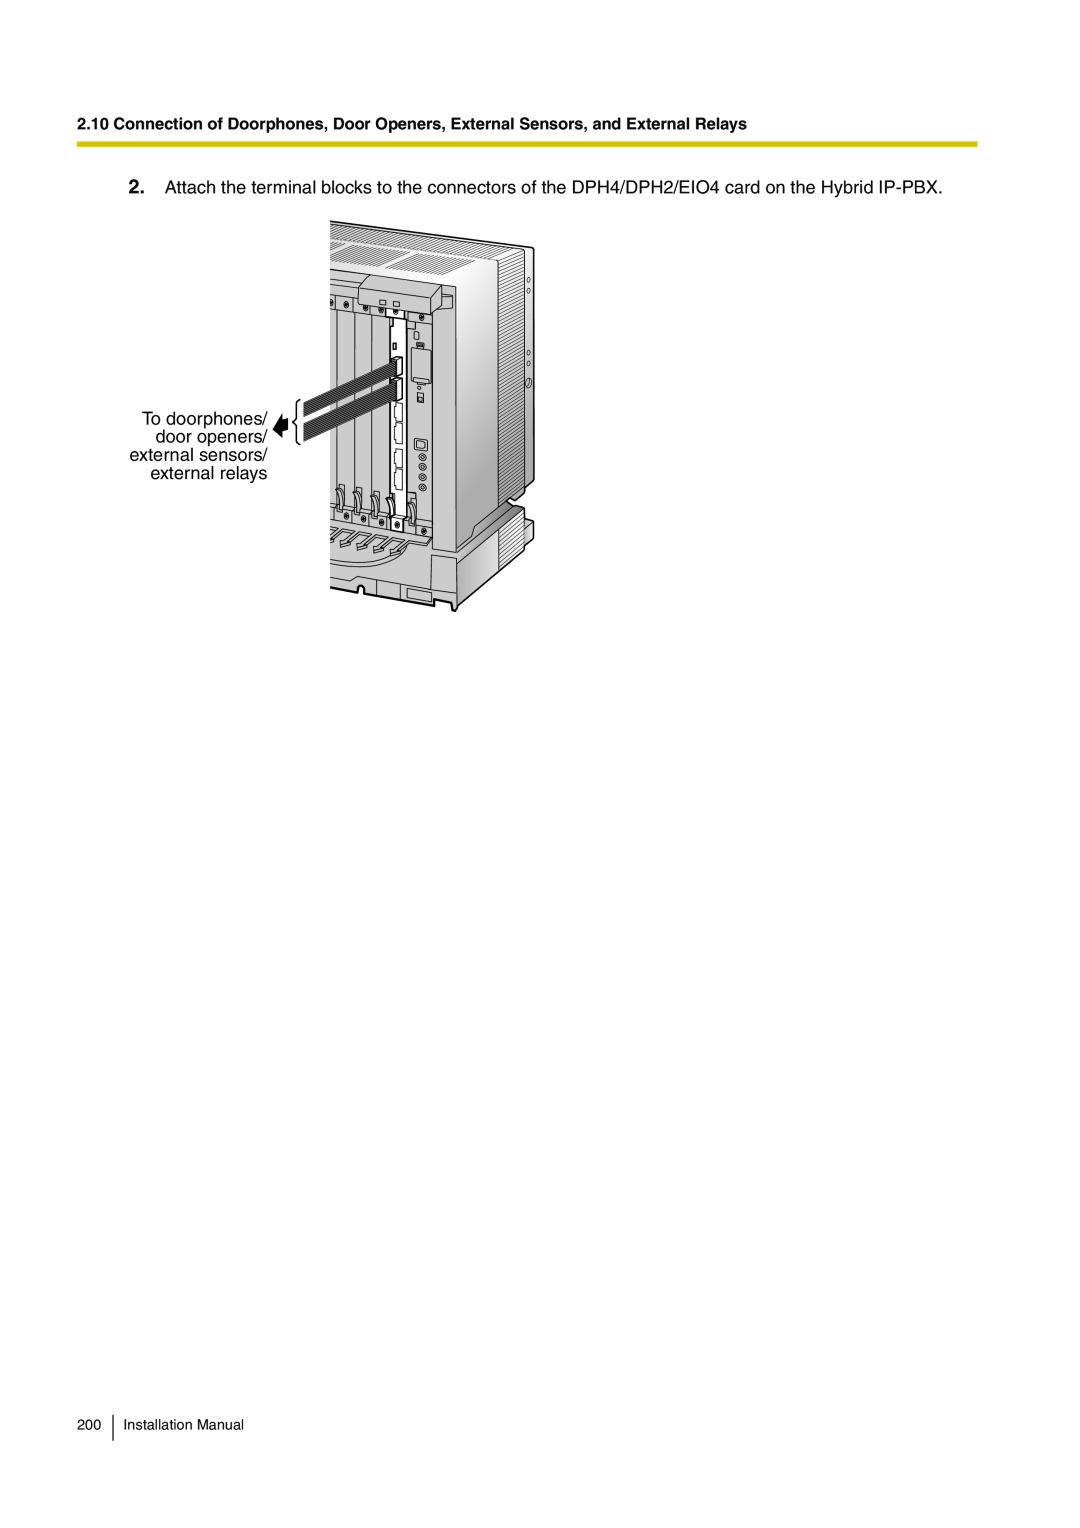 Panasonic KX-TDA100 installation manual To doorphones, door openers, external sensors, external relays, Installation Manual 